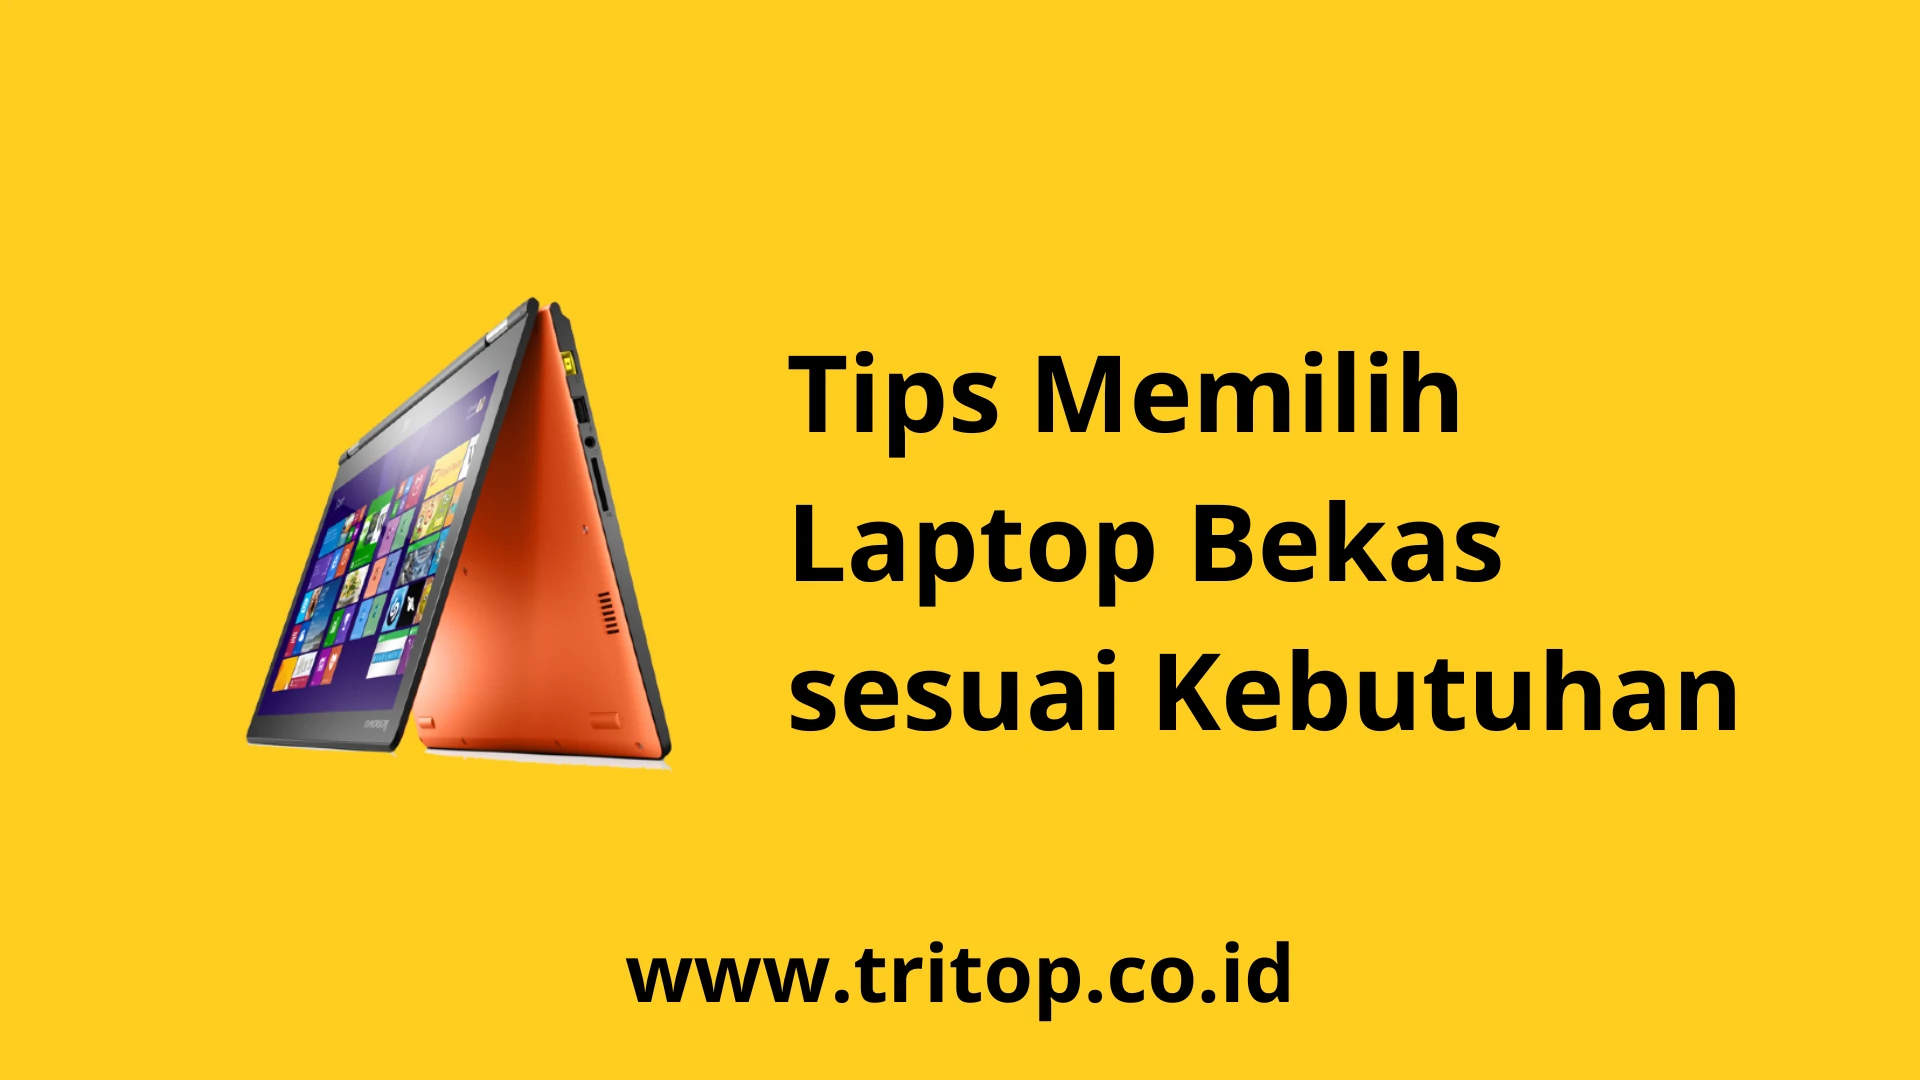 Memilih Laptop Bekas www.tritop.co.id